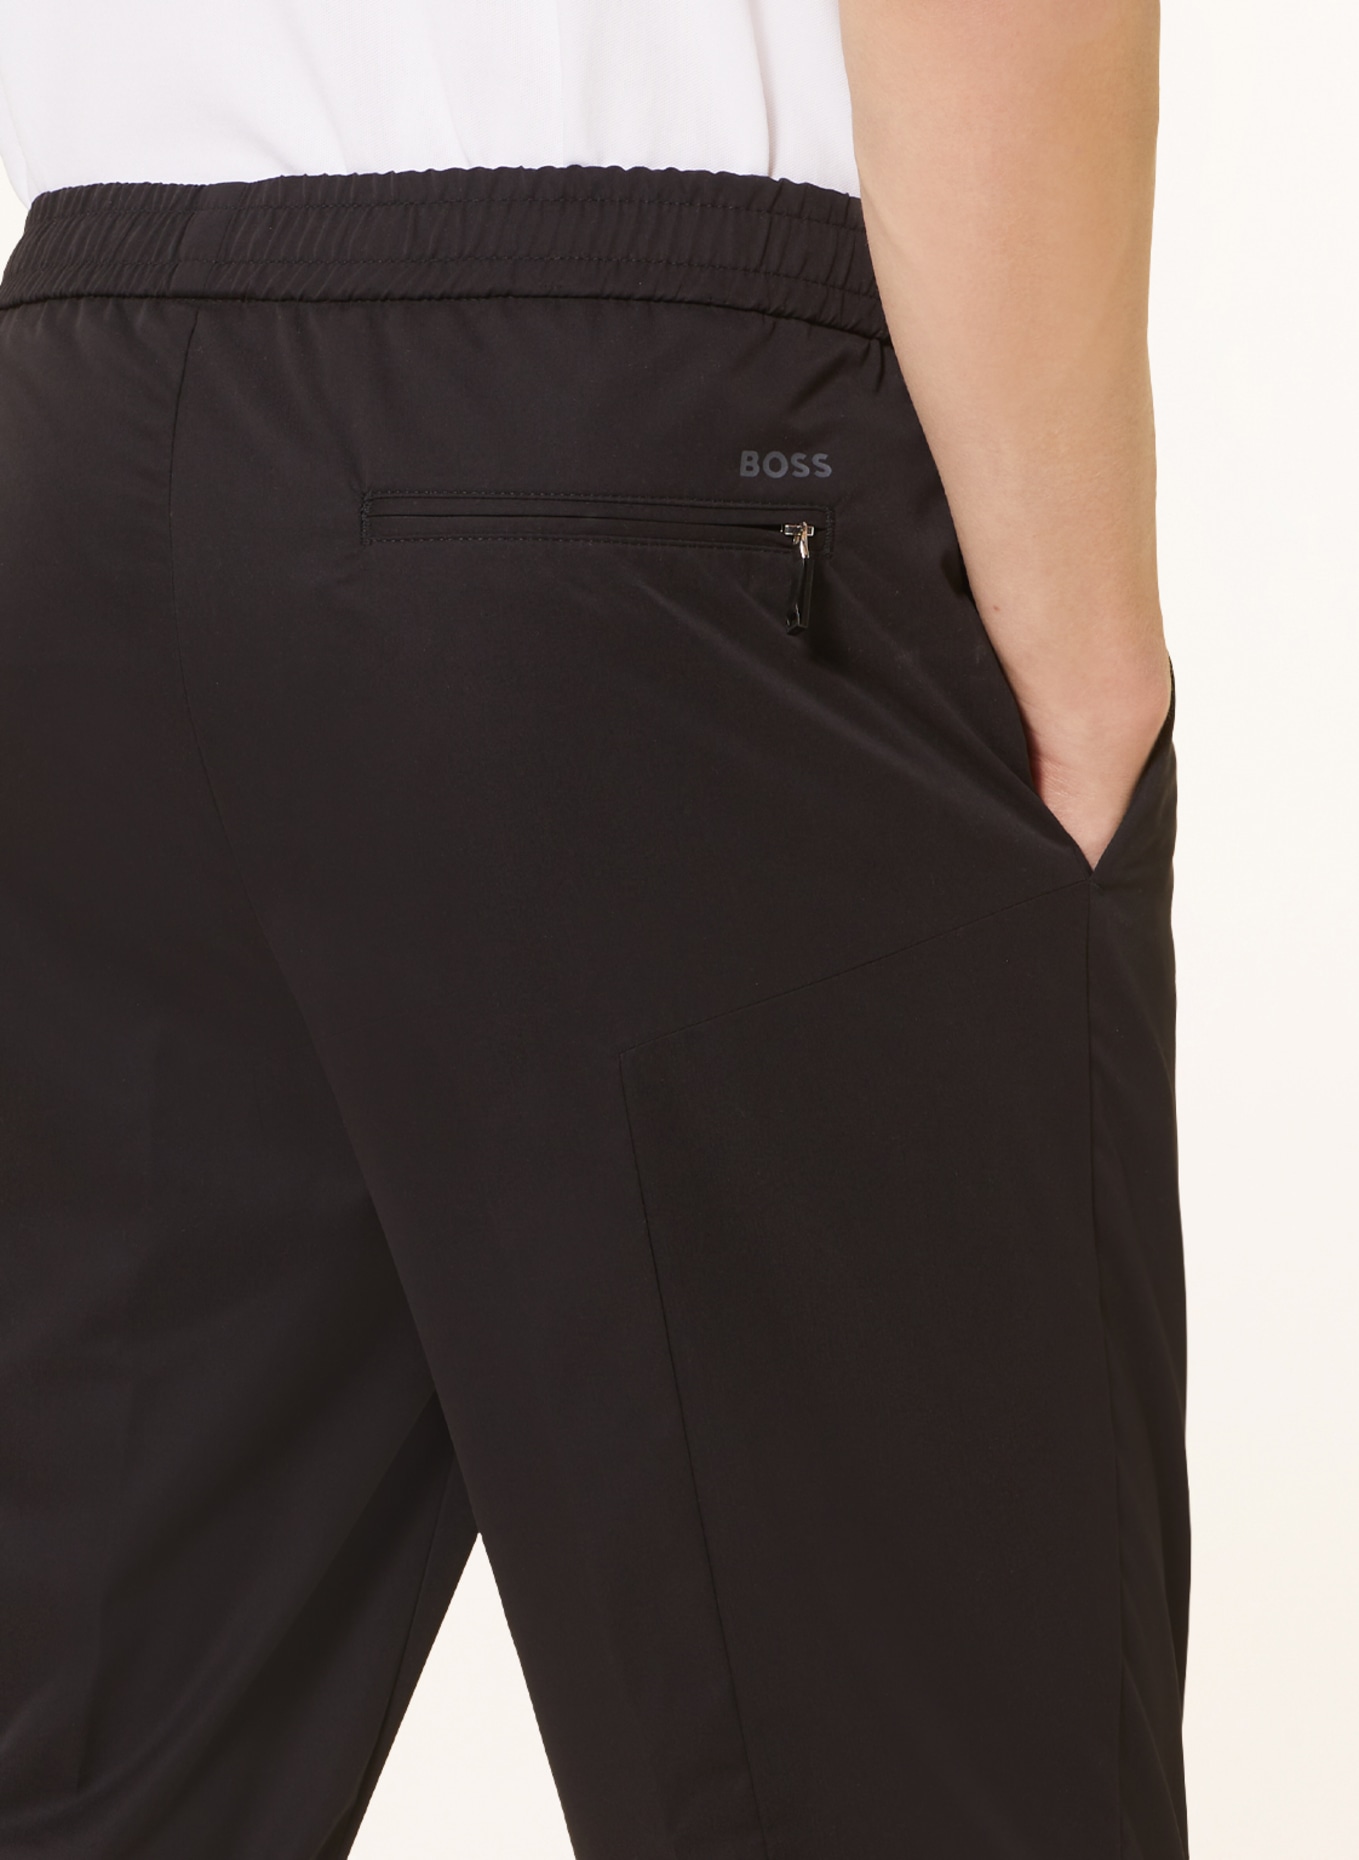 BOSS Pants SHINOBI in jogger style , Color: BLACK (Image 5)